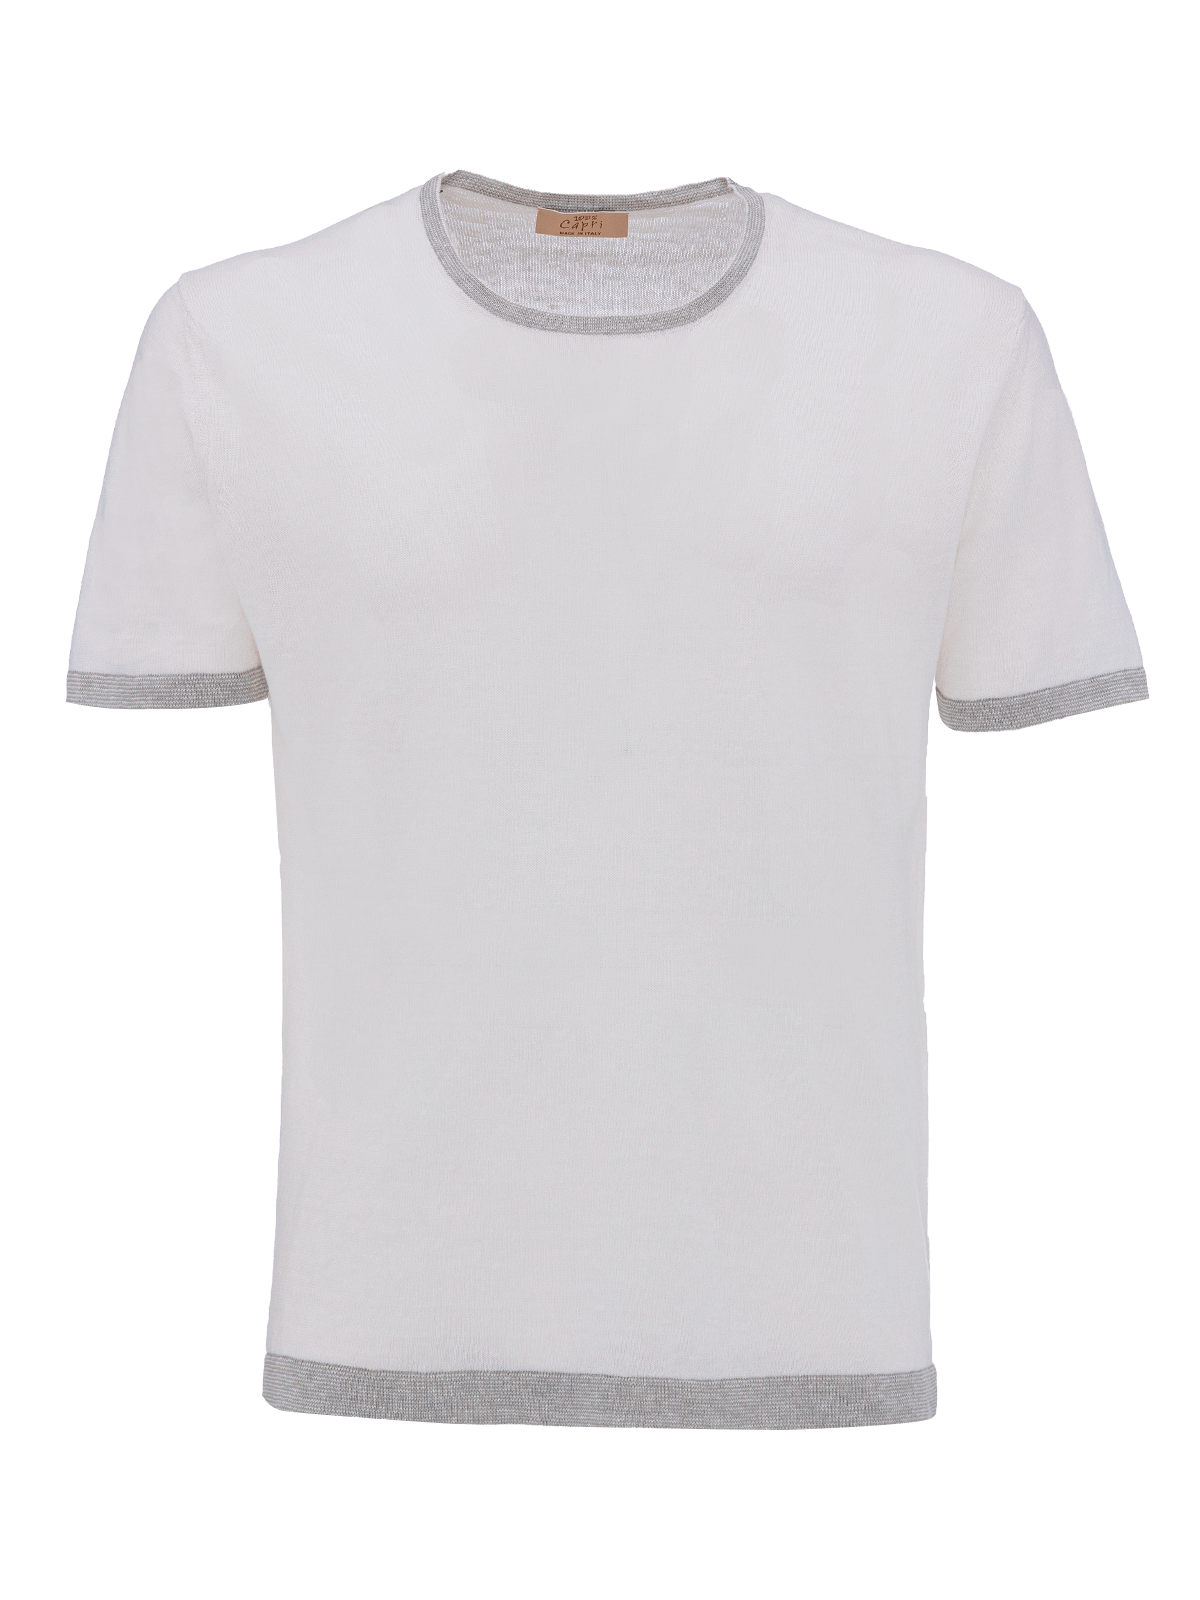 St. Barth linen T-Shirt for man 100% Capri white and light grey linen t-shirt front